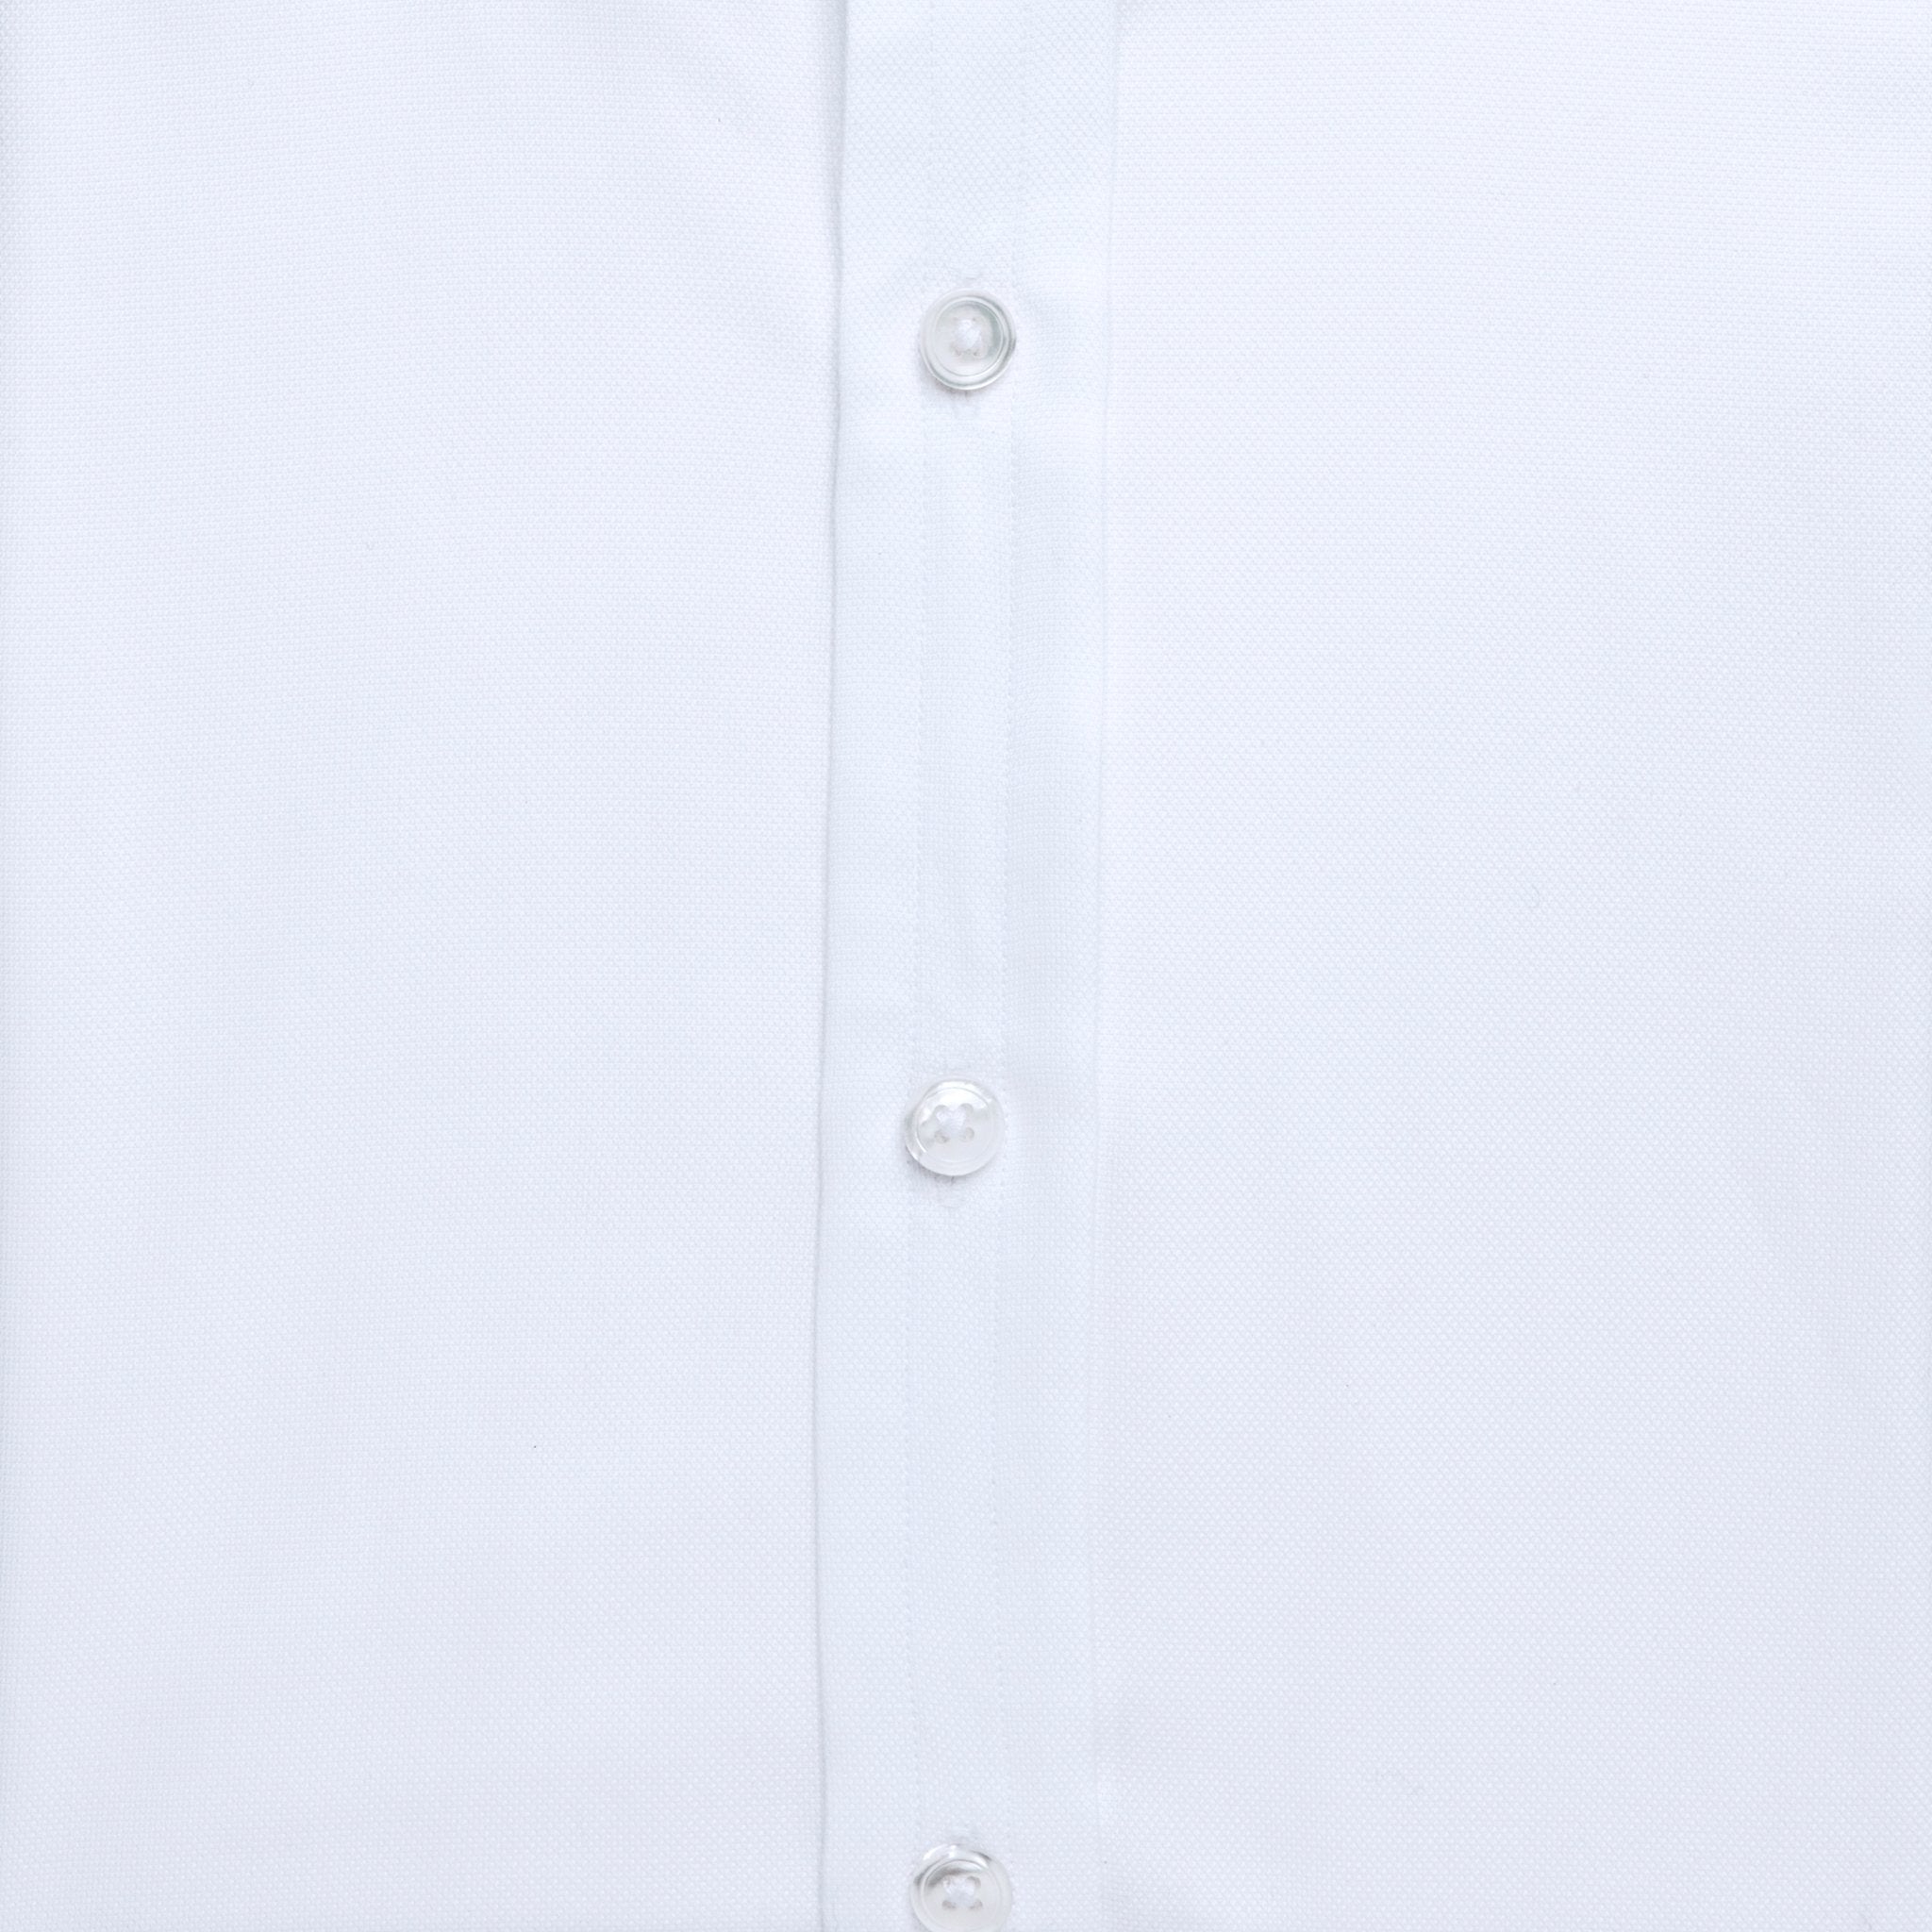 White Oxford Cotton Shirt - Bespoke freeshipping - Emma Willis